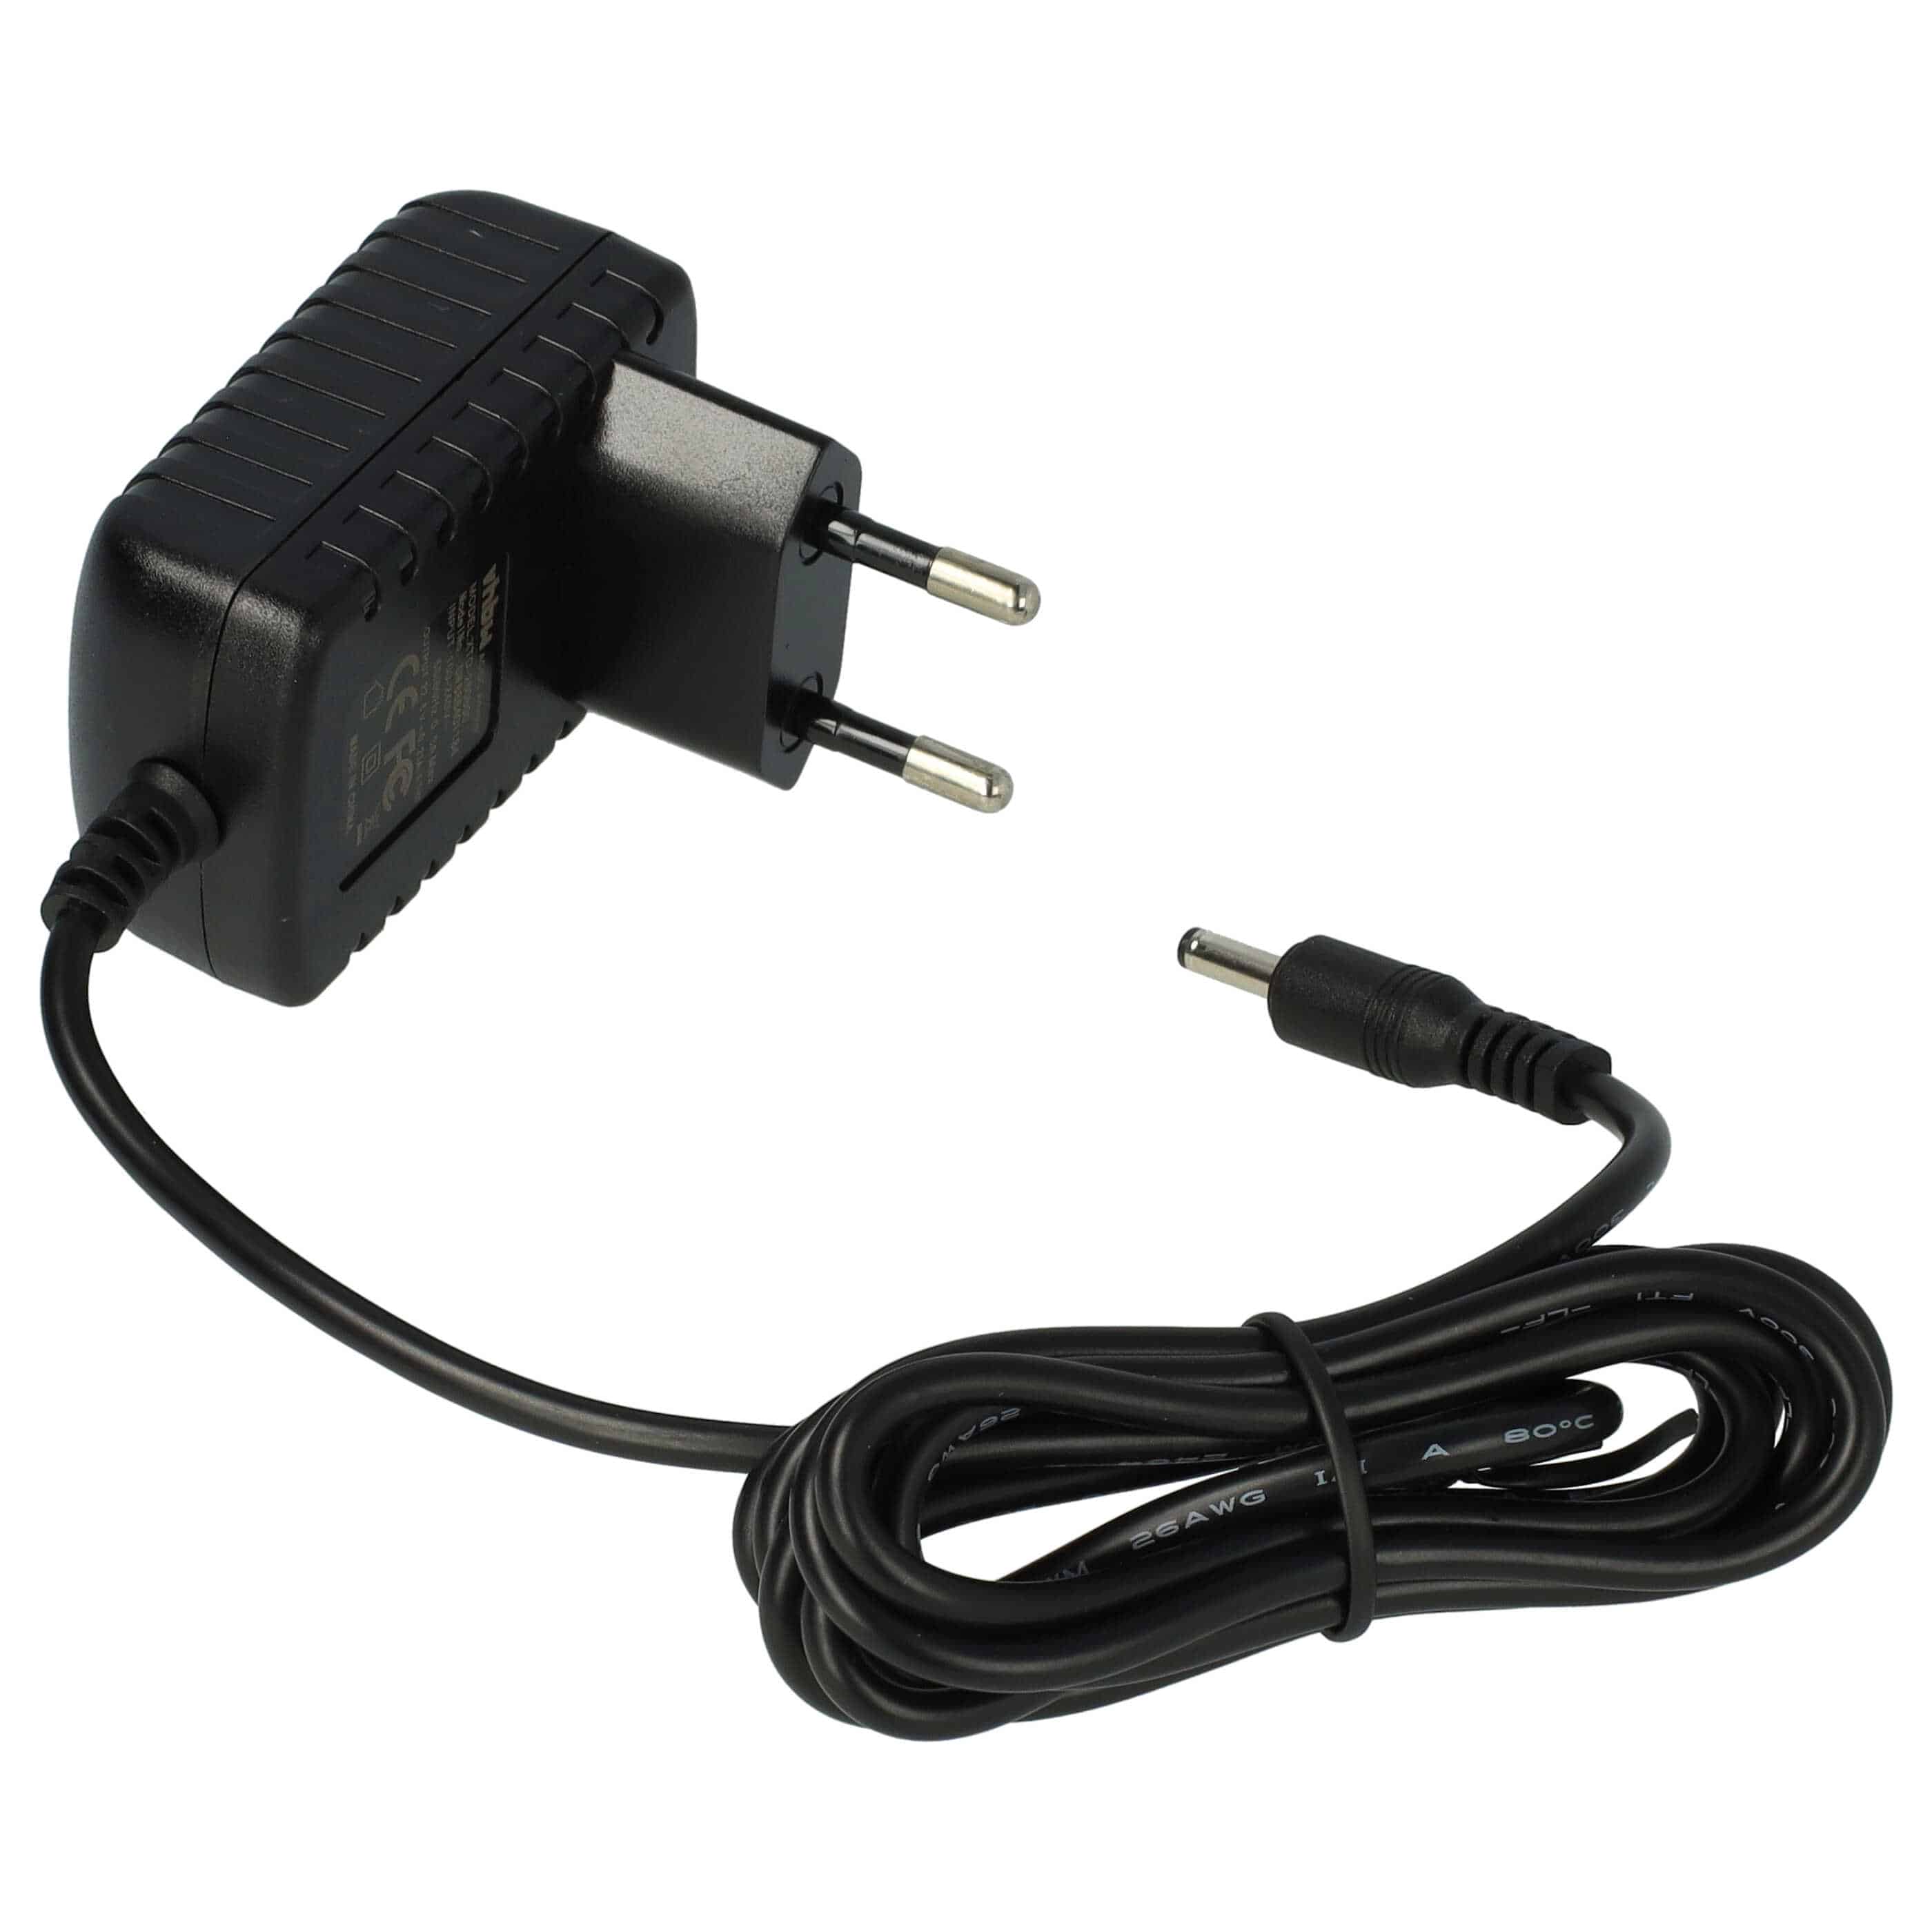 Mains Power Adapter replaces Black & Decker 90500857 for Black & Decker Power Tool